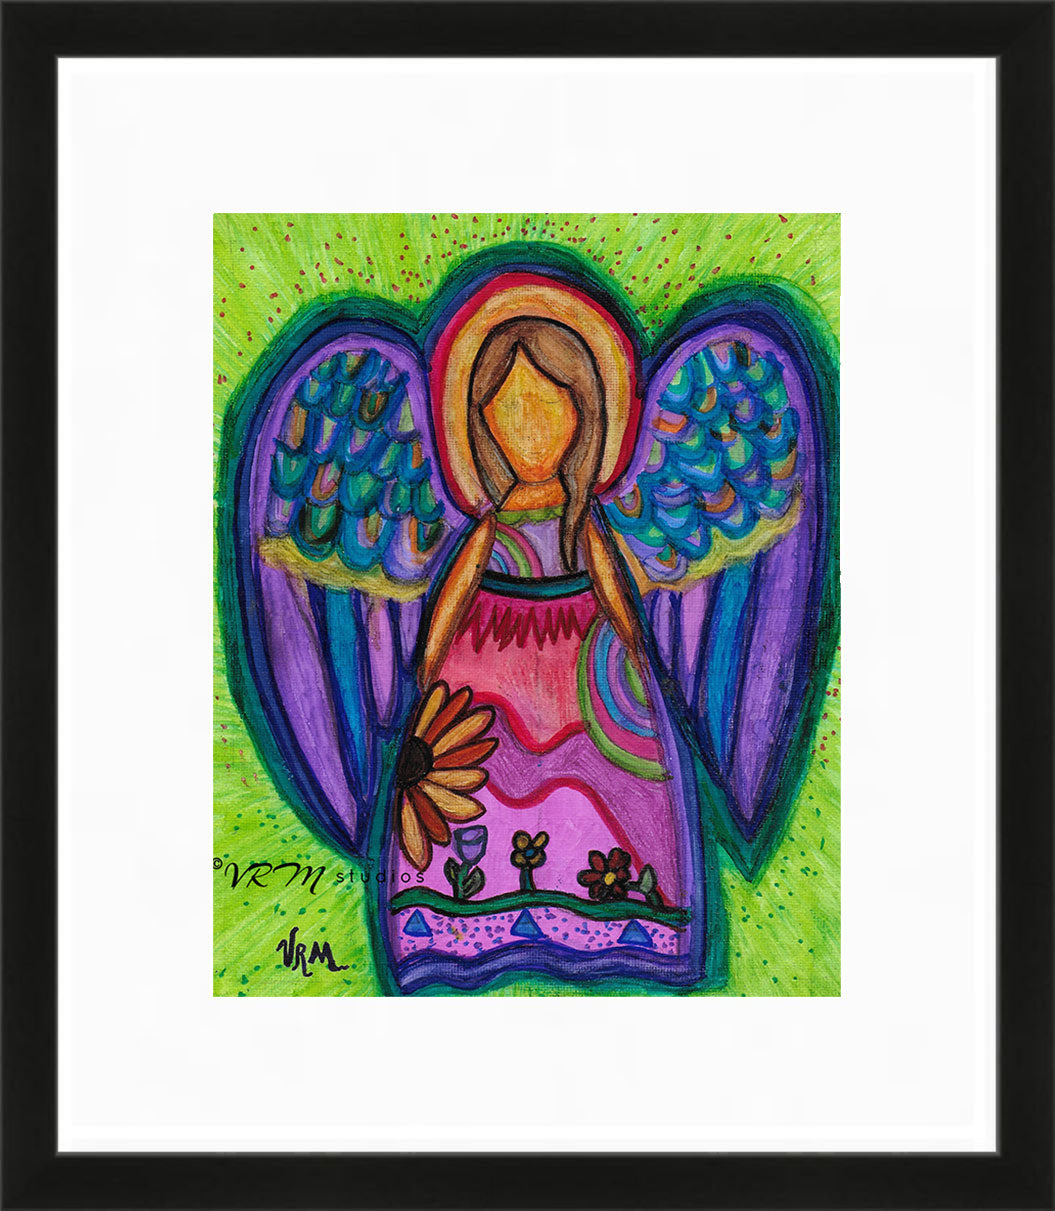 Bella Angel, original angel folk art painting on canvas sheet, matted, 11x14 inches